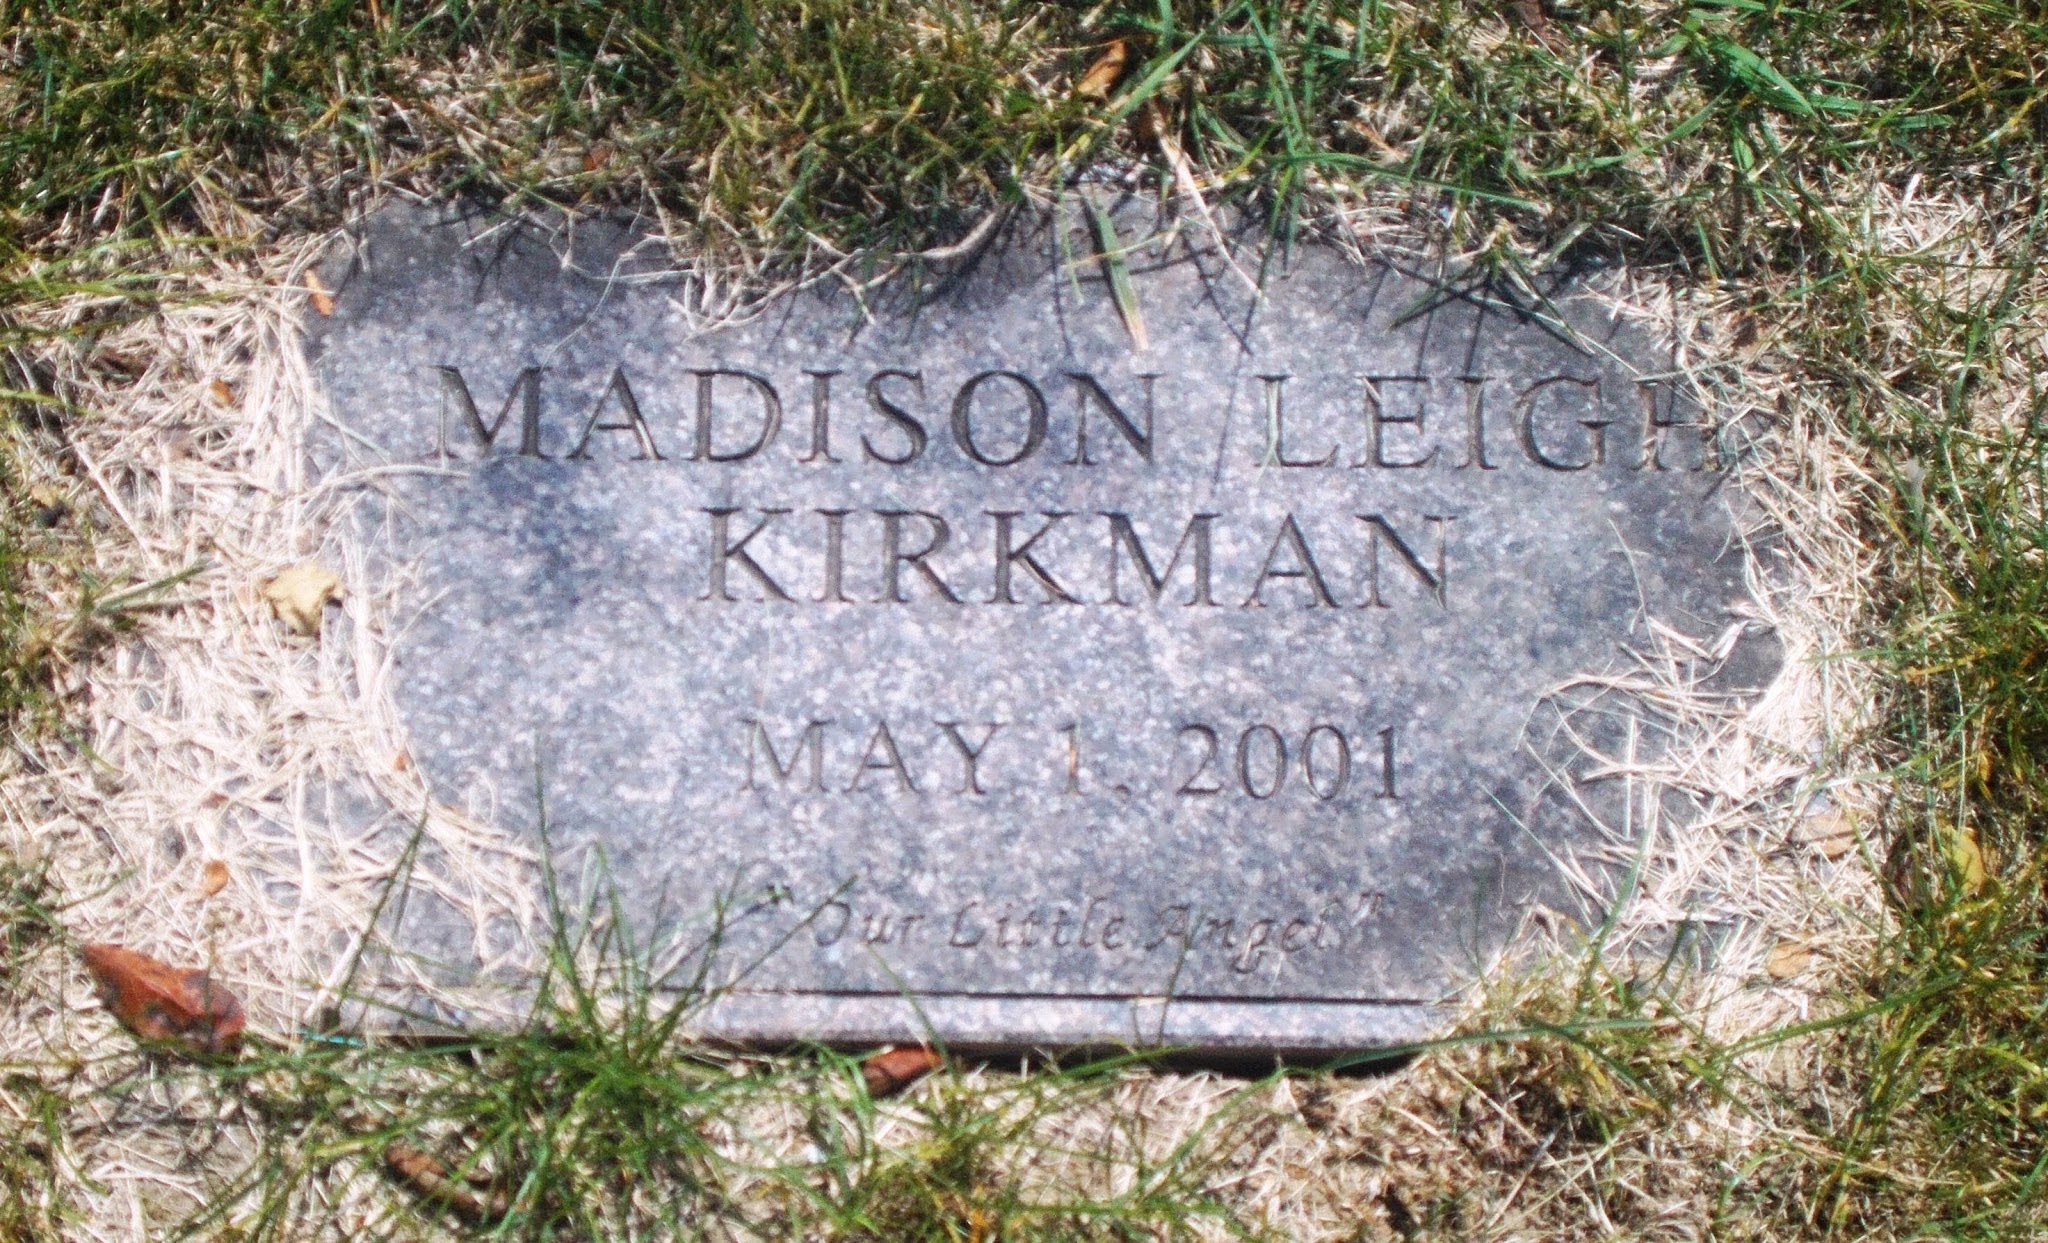 Madison Leigh Kirkman